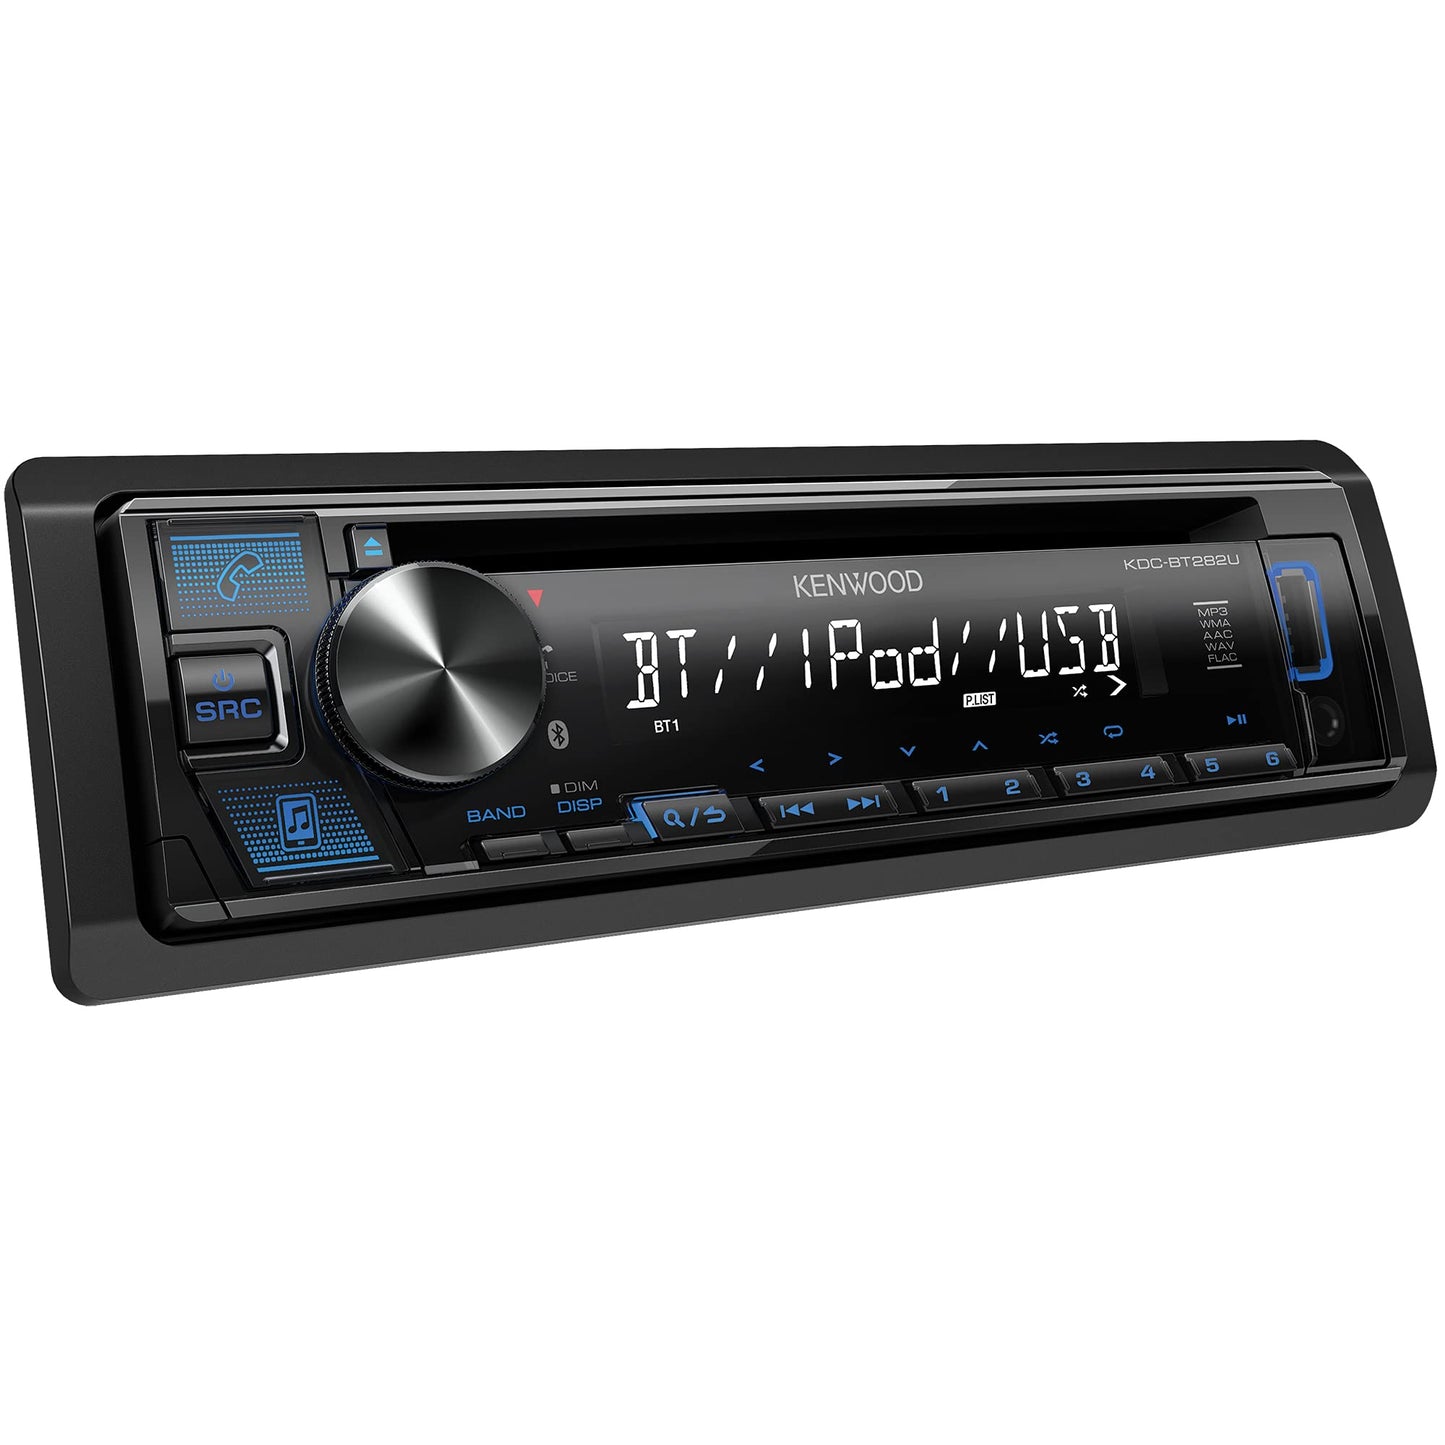 Kenwood KDC-BT282U AM FM CD USB AUX Bluetooth Car Stereo